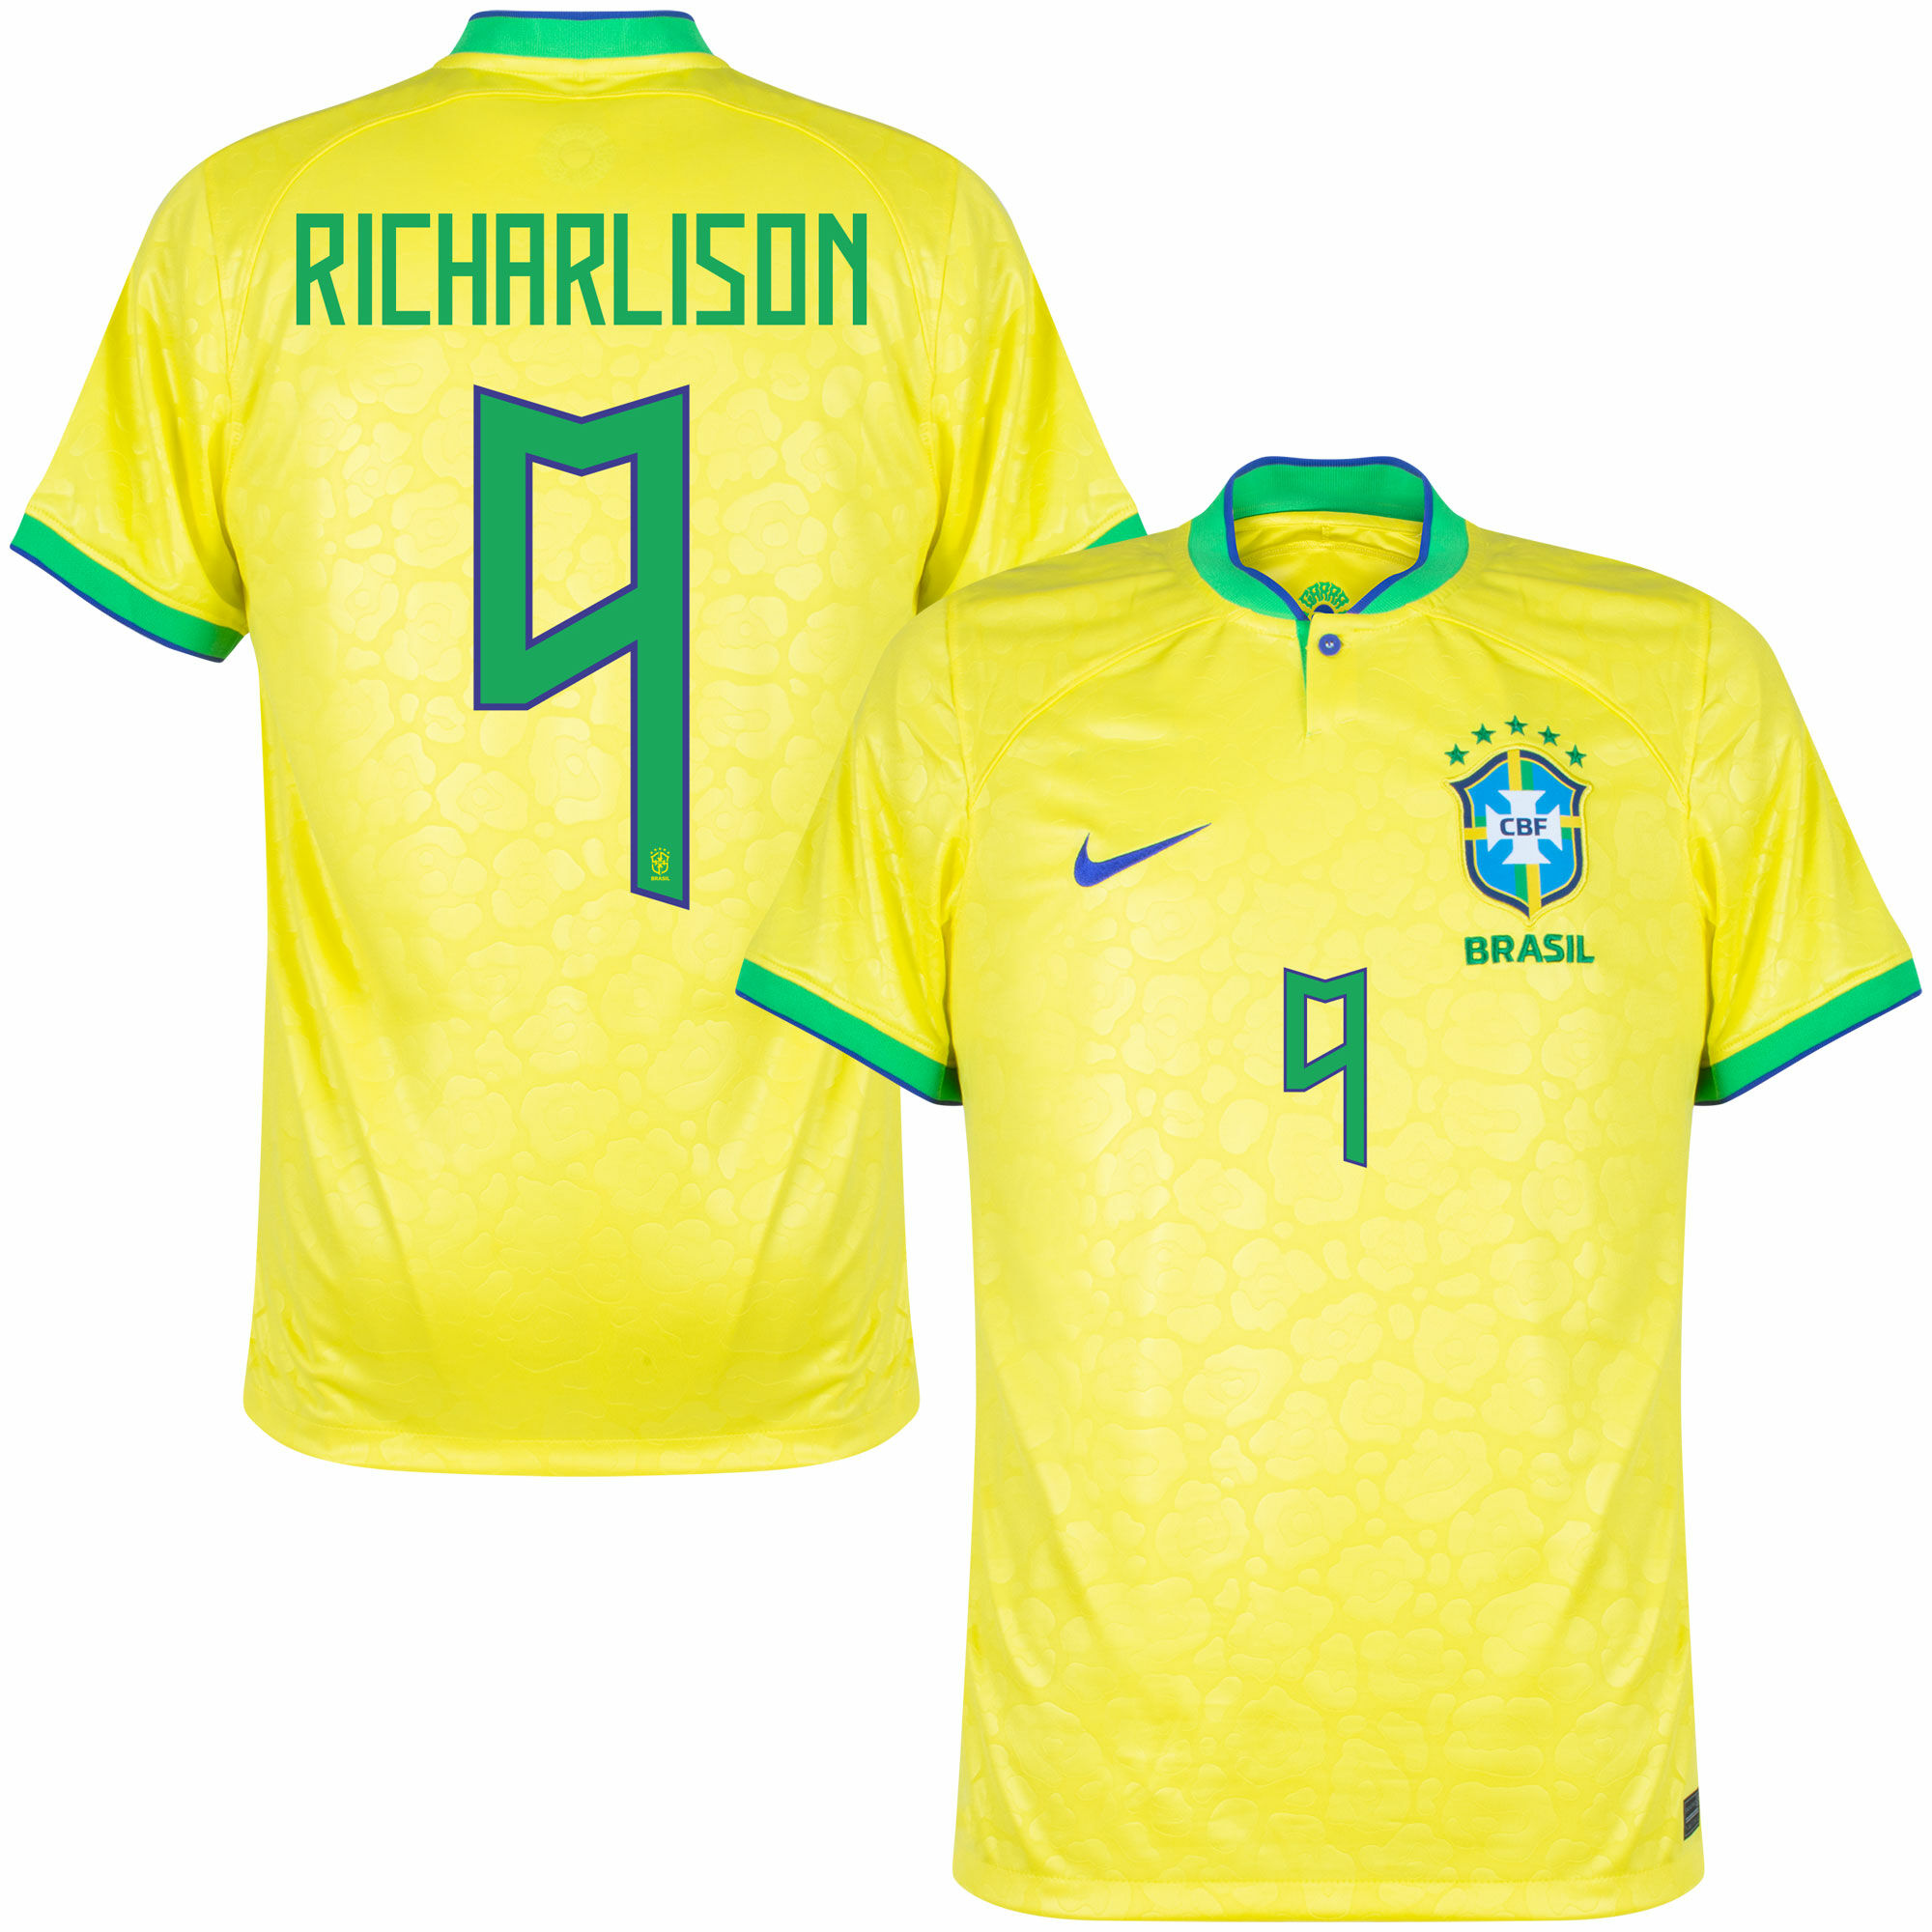 Replica RICHARLISON #7 Brazil Home Jersey 2021 By Nike